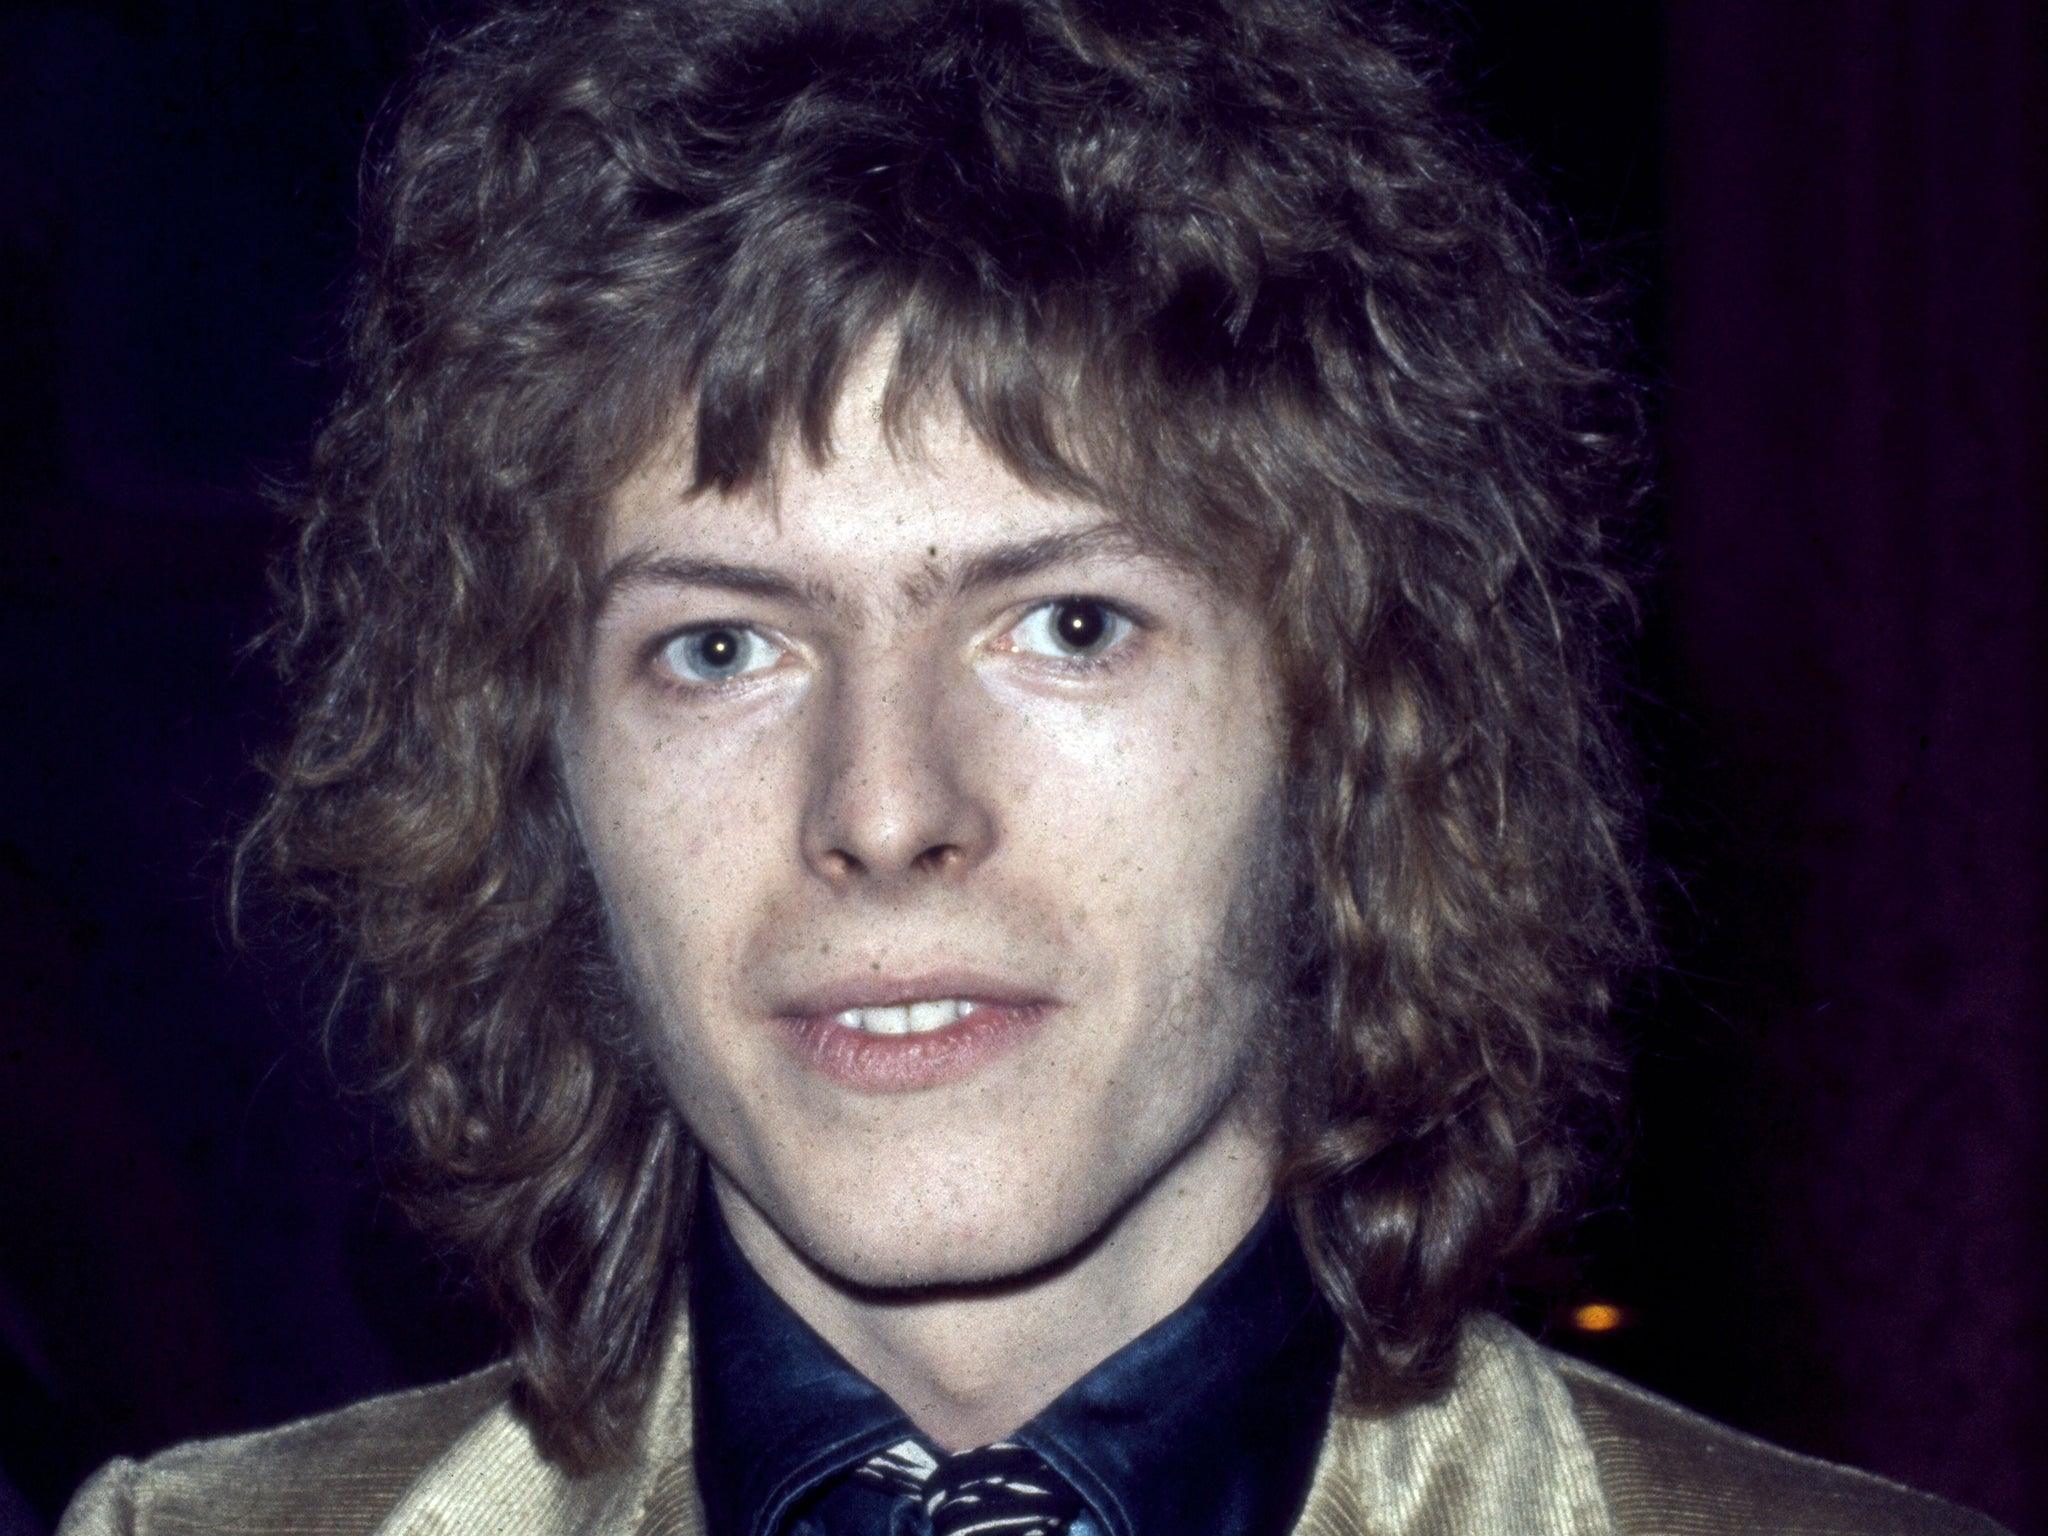 David Bowie in 1969